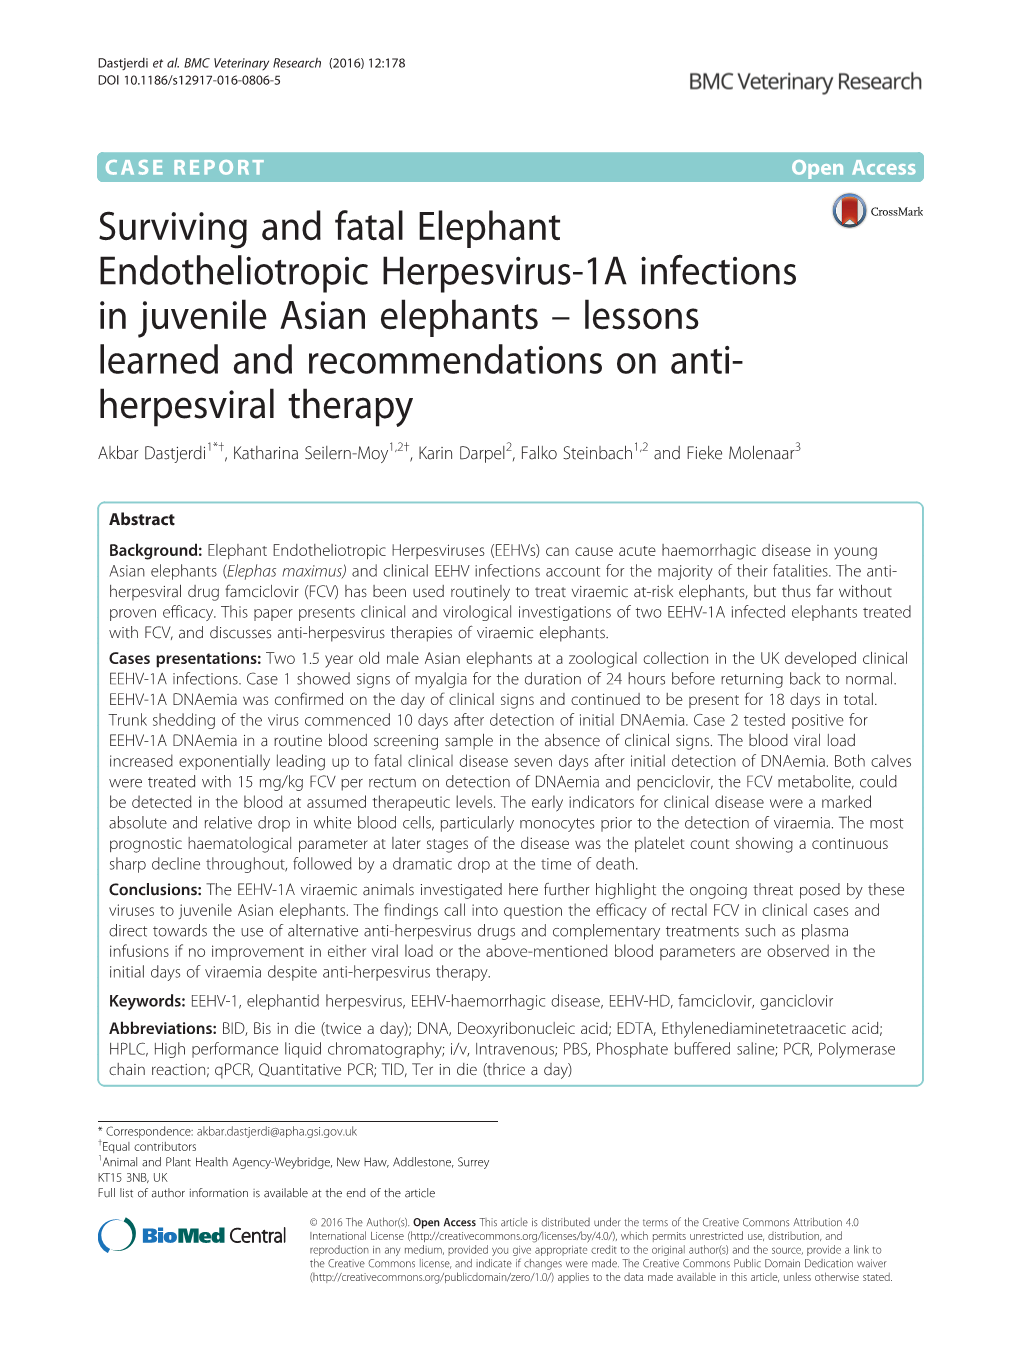 Surviving and Fatal Elephant Endotheliotropic Herpesvirus-1A